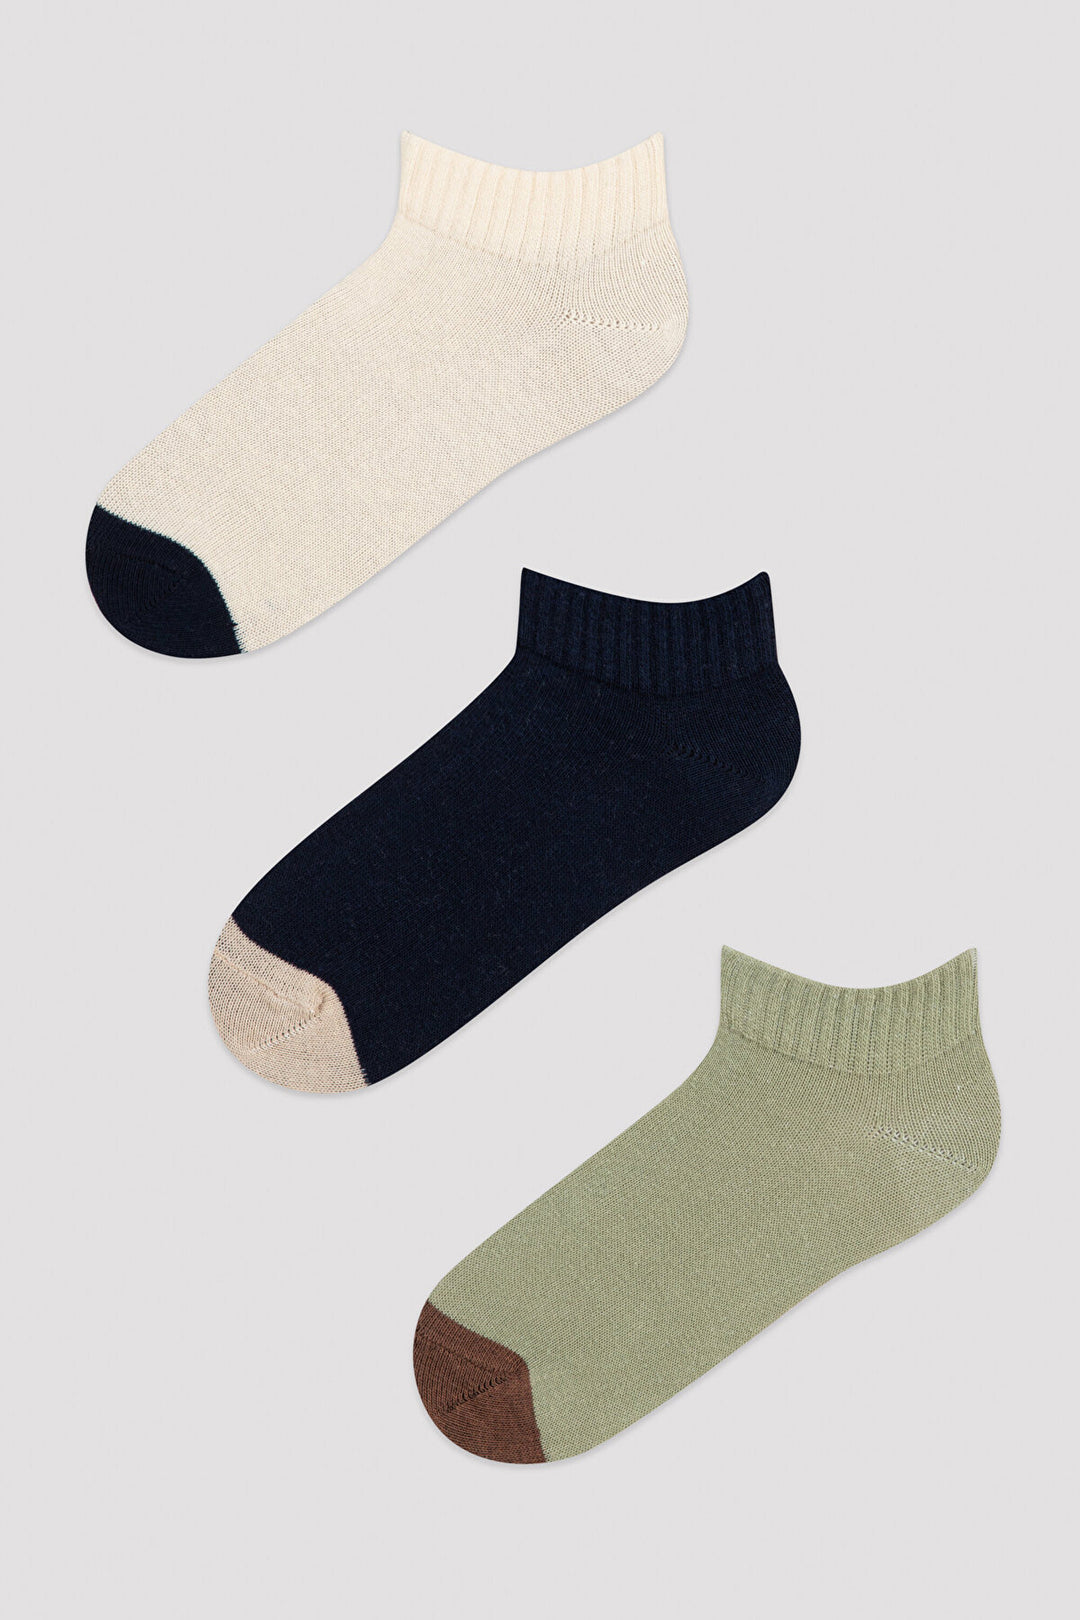 Multi Colour Boys Nostalgic 3In1 Liner Socks